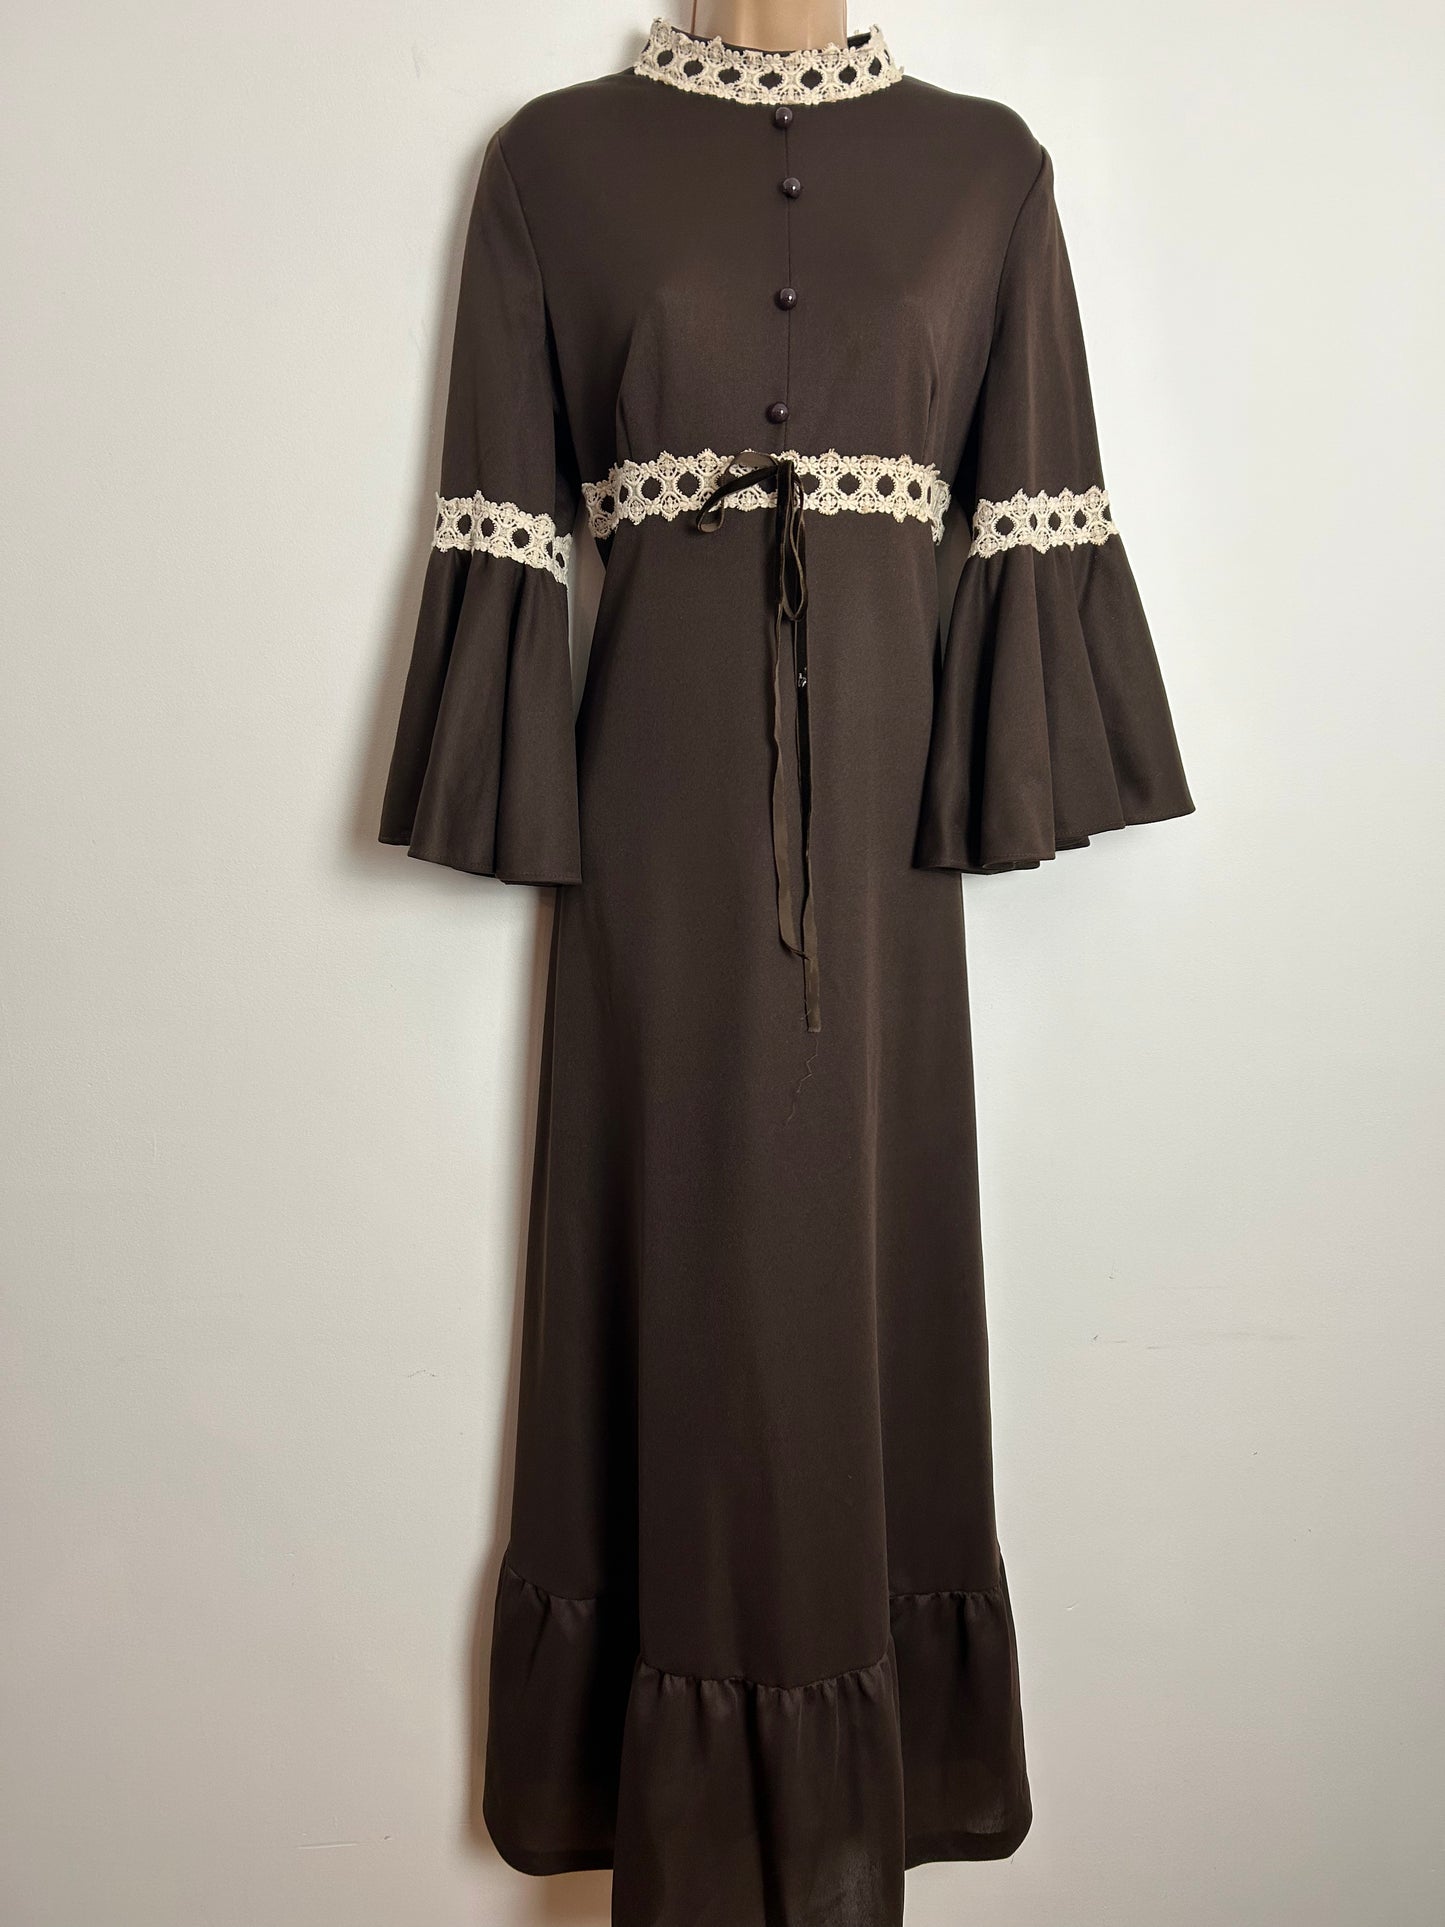 Vintage 1970s UK Size 14-16 Chocolate Brown Lace Trim Flared Cuff Boho Maxi Dress